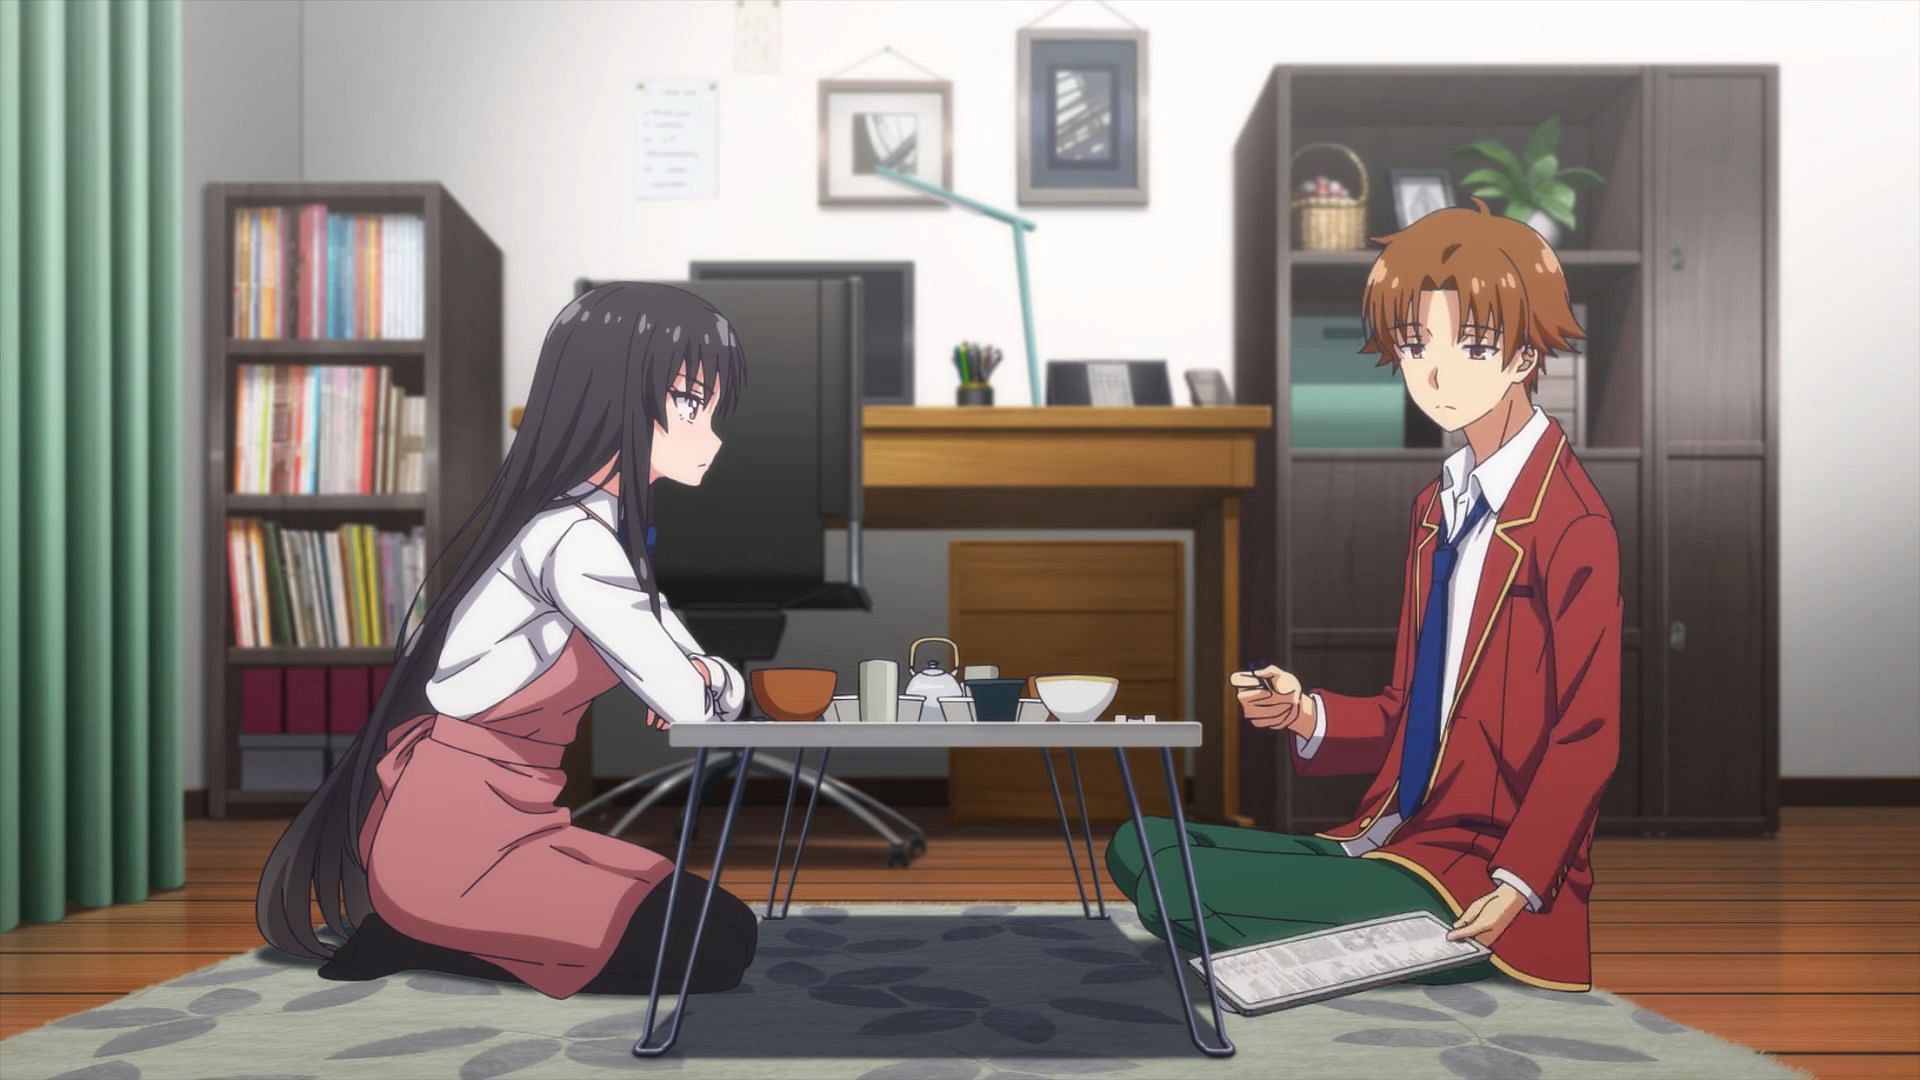 Kiyotaka having lunch with Suzune, as seen in Classroom of the Elite Season 3 episode 10 (Image via Lerche)